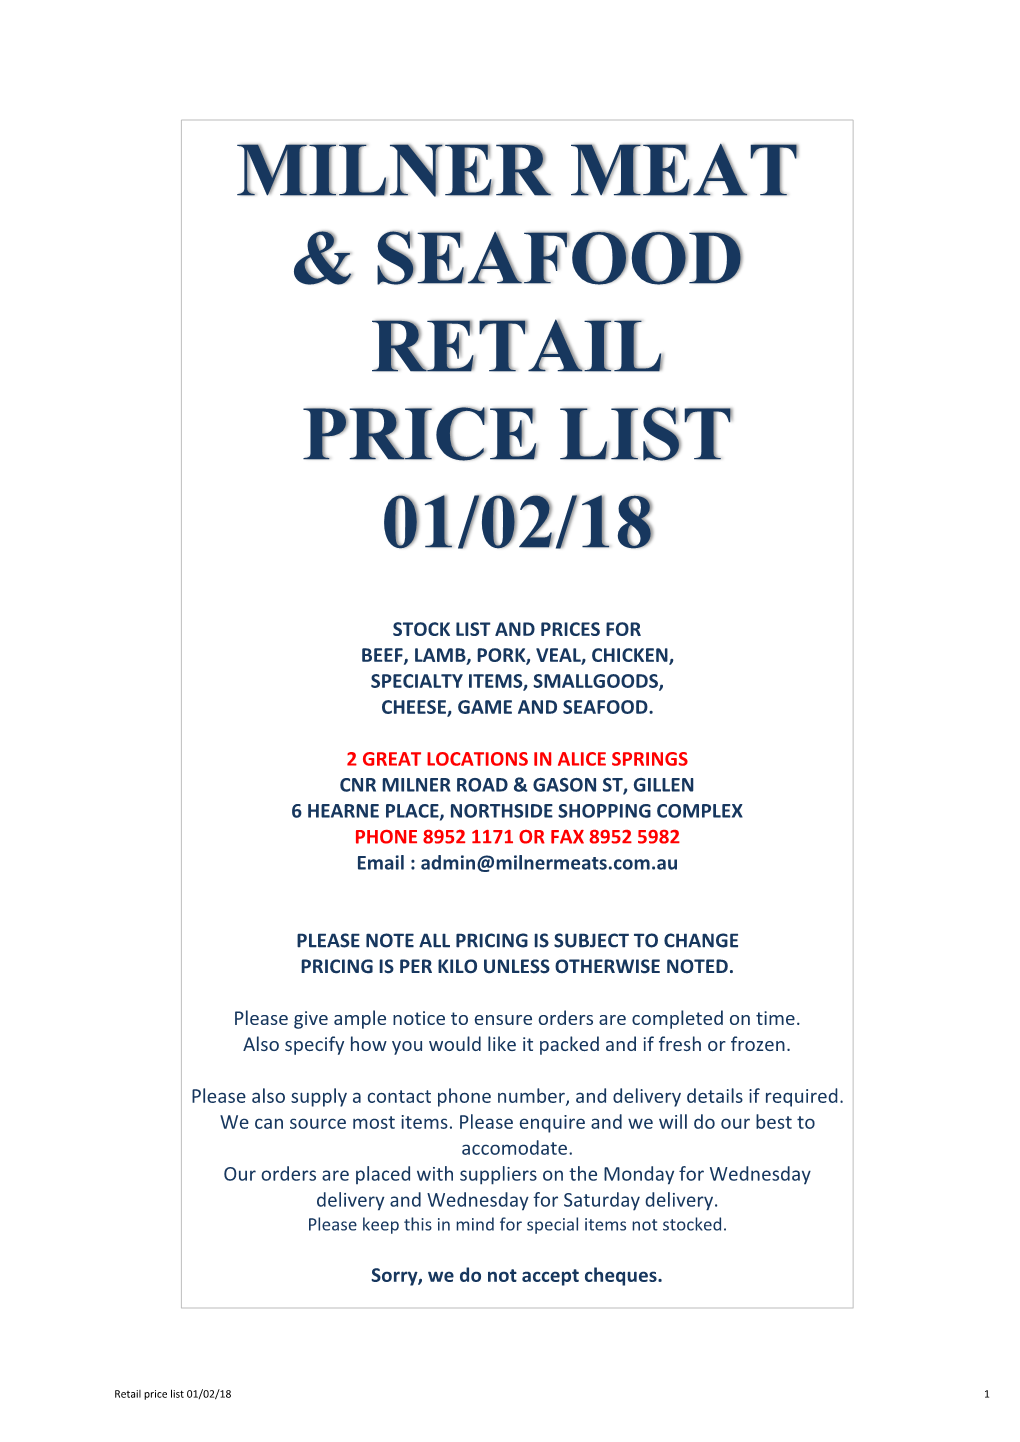 Milner Meat & Seafood Retail Price List 01/02/18